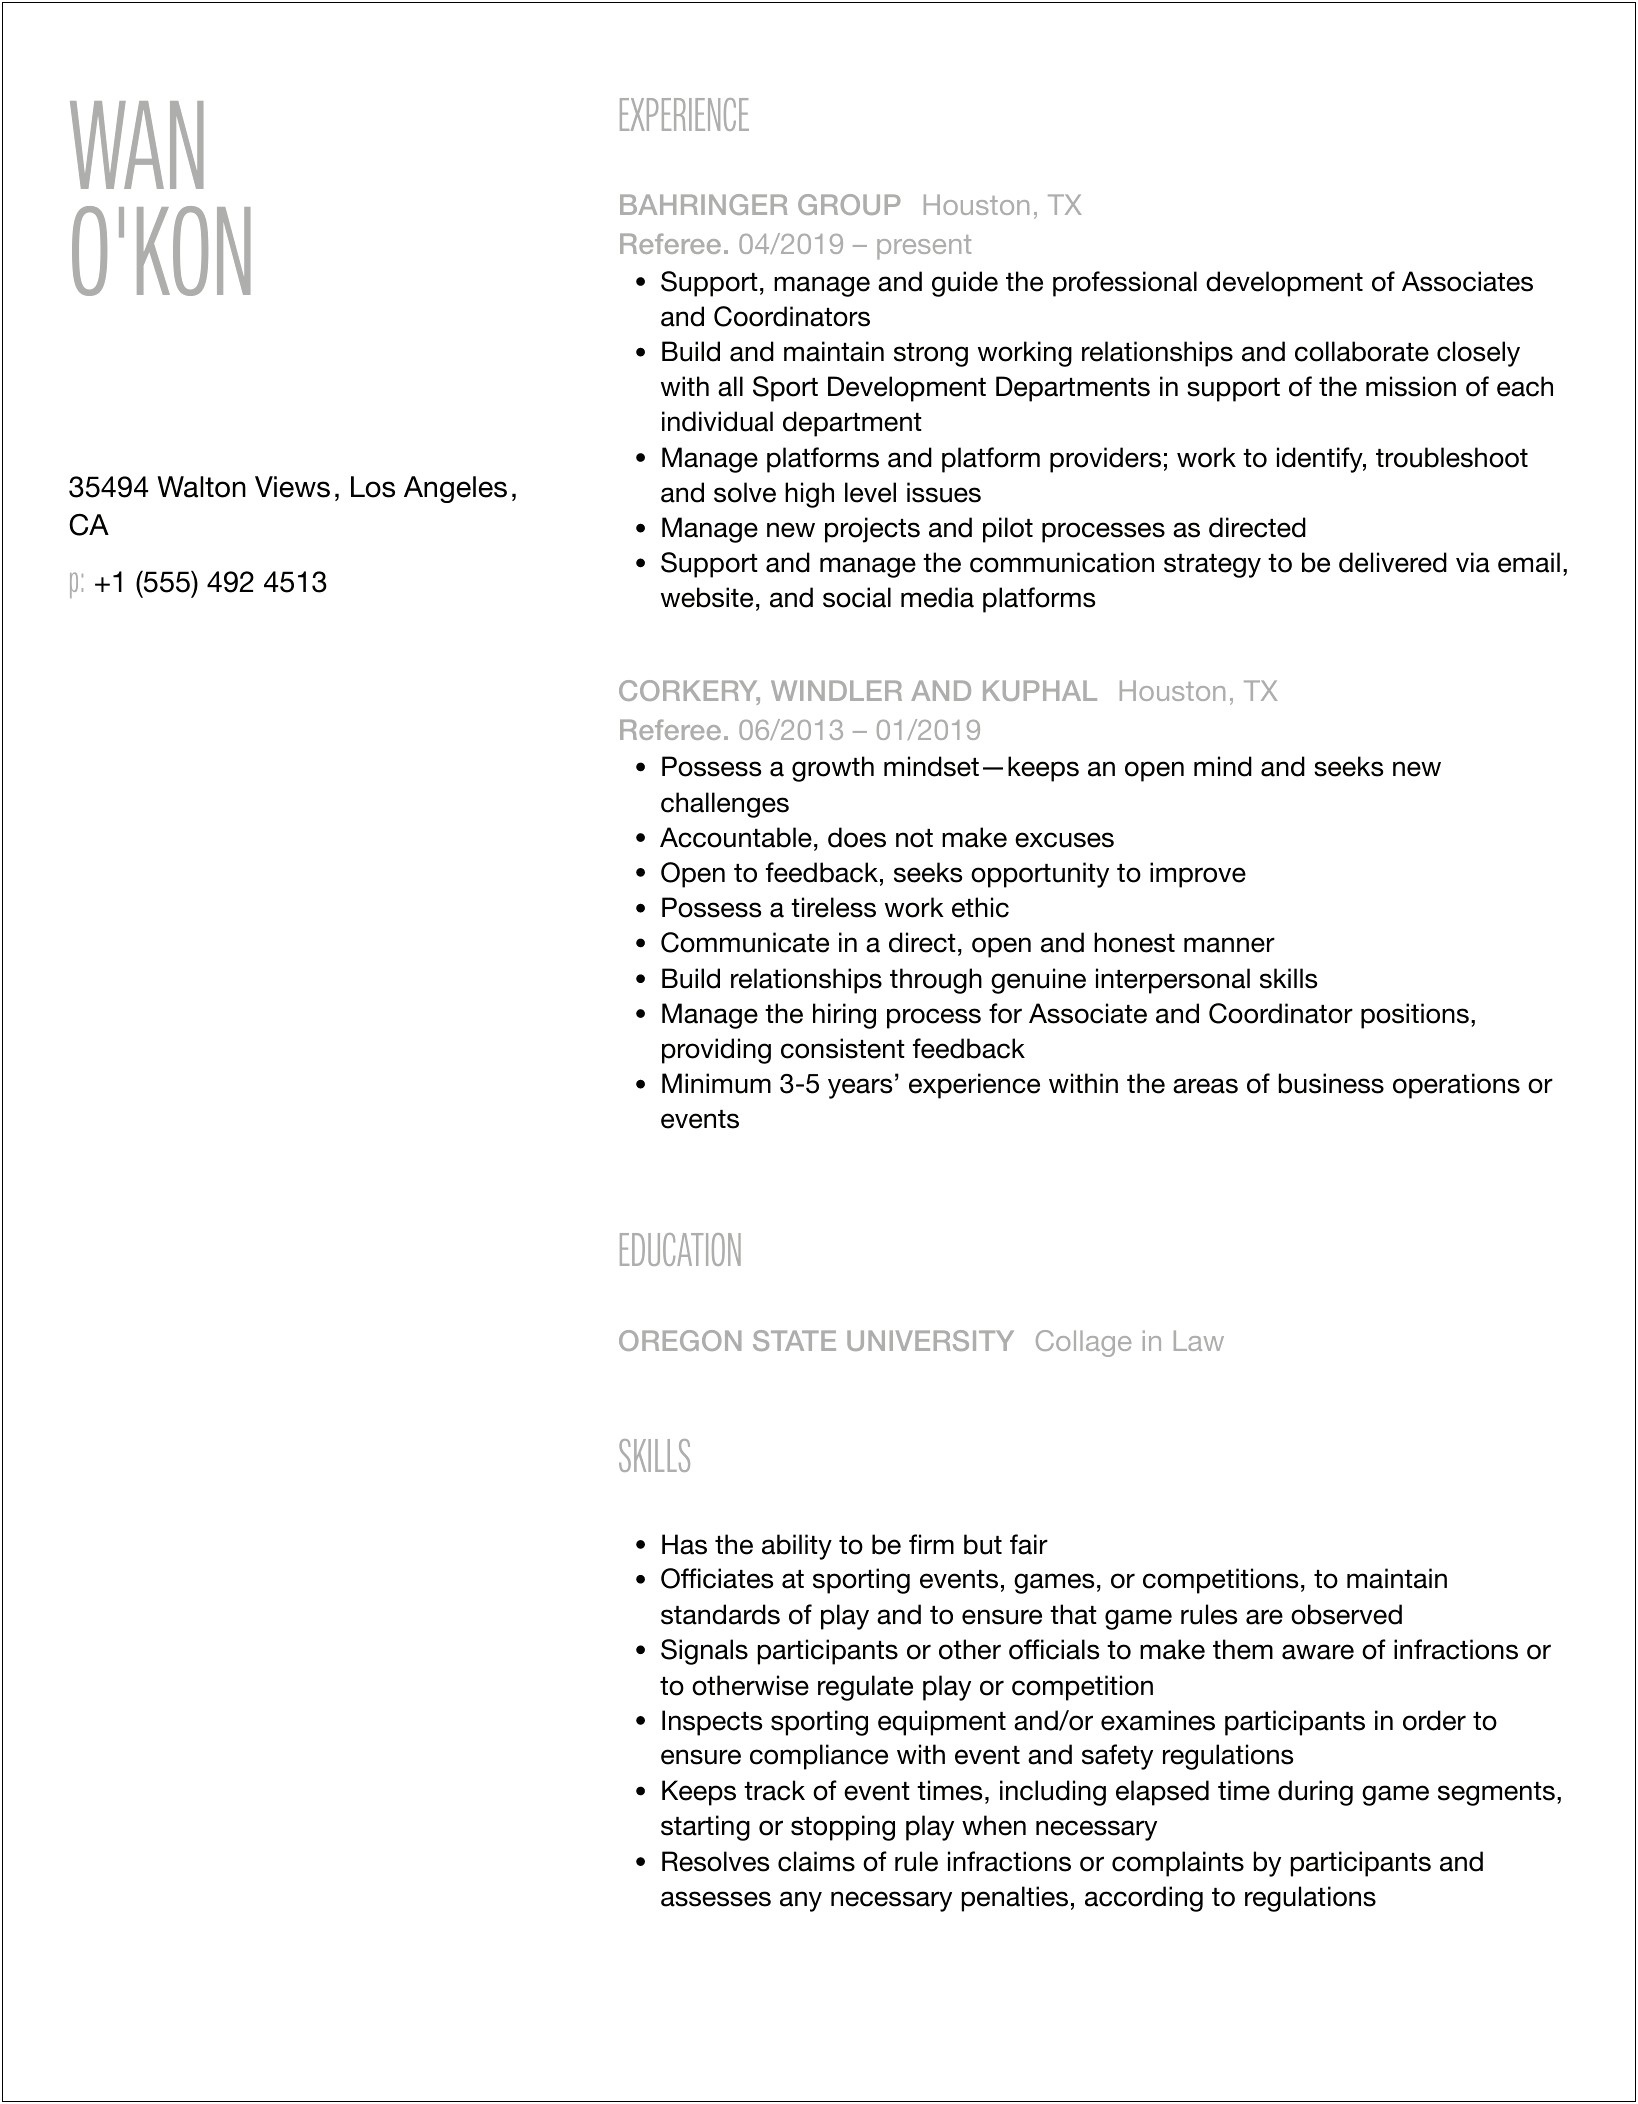 Sample Resume Job Description For Soccer Referee